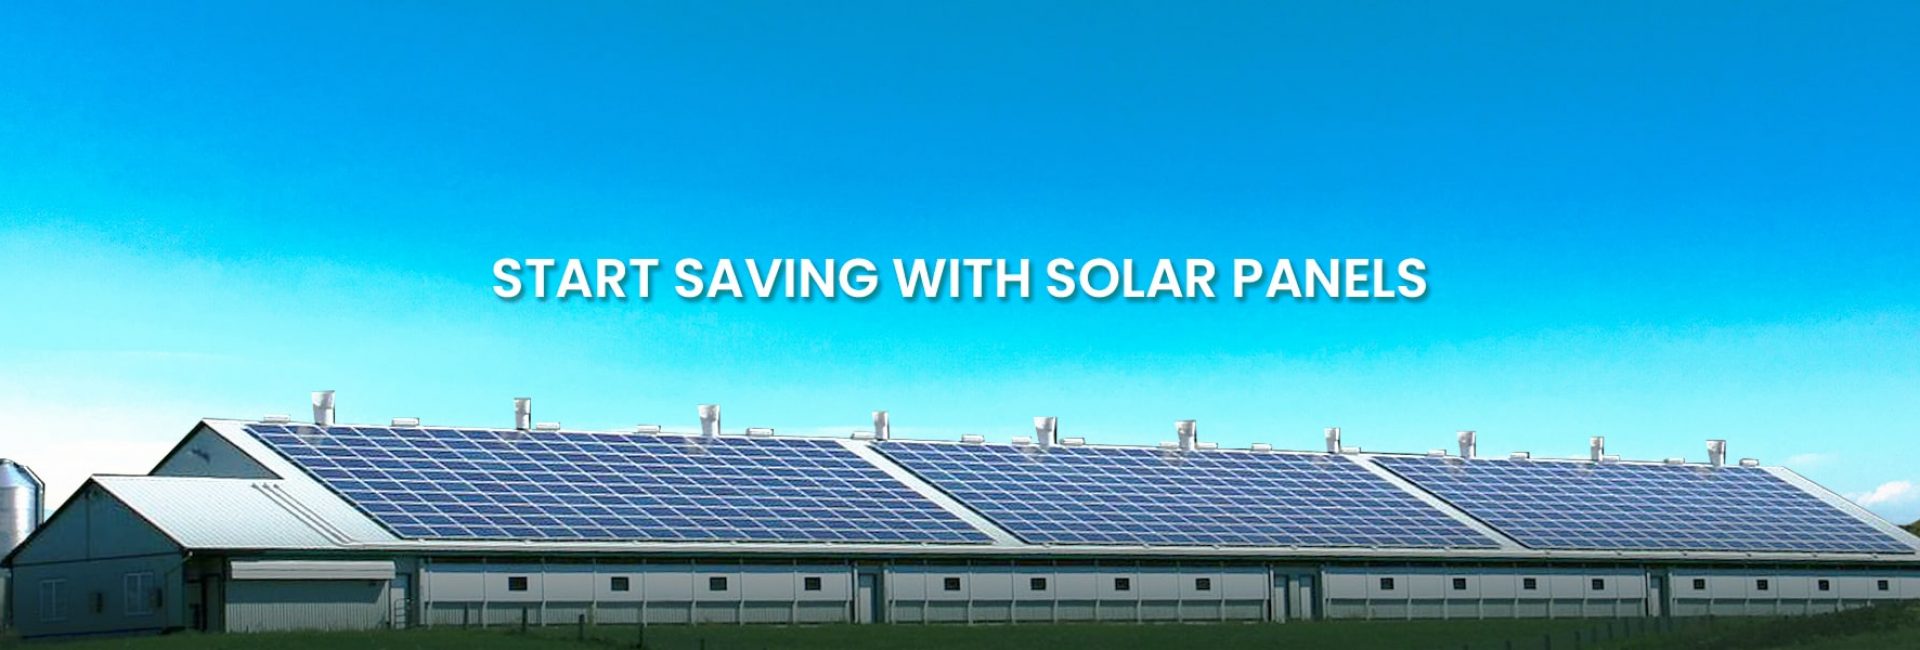 Start saving with solar panels